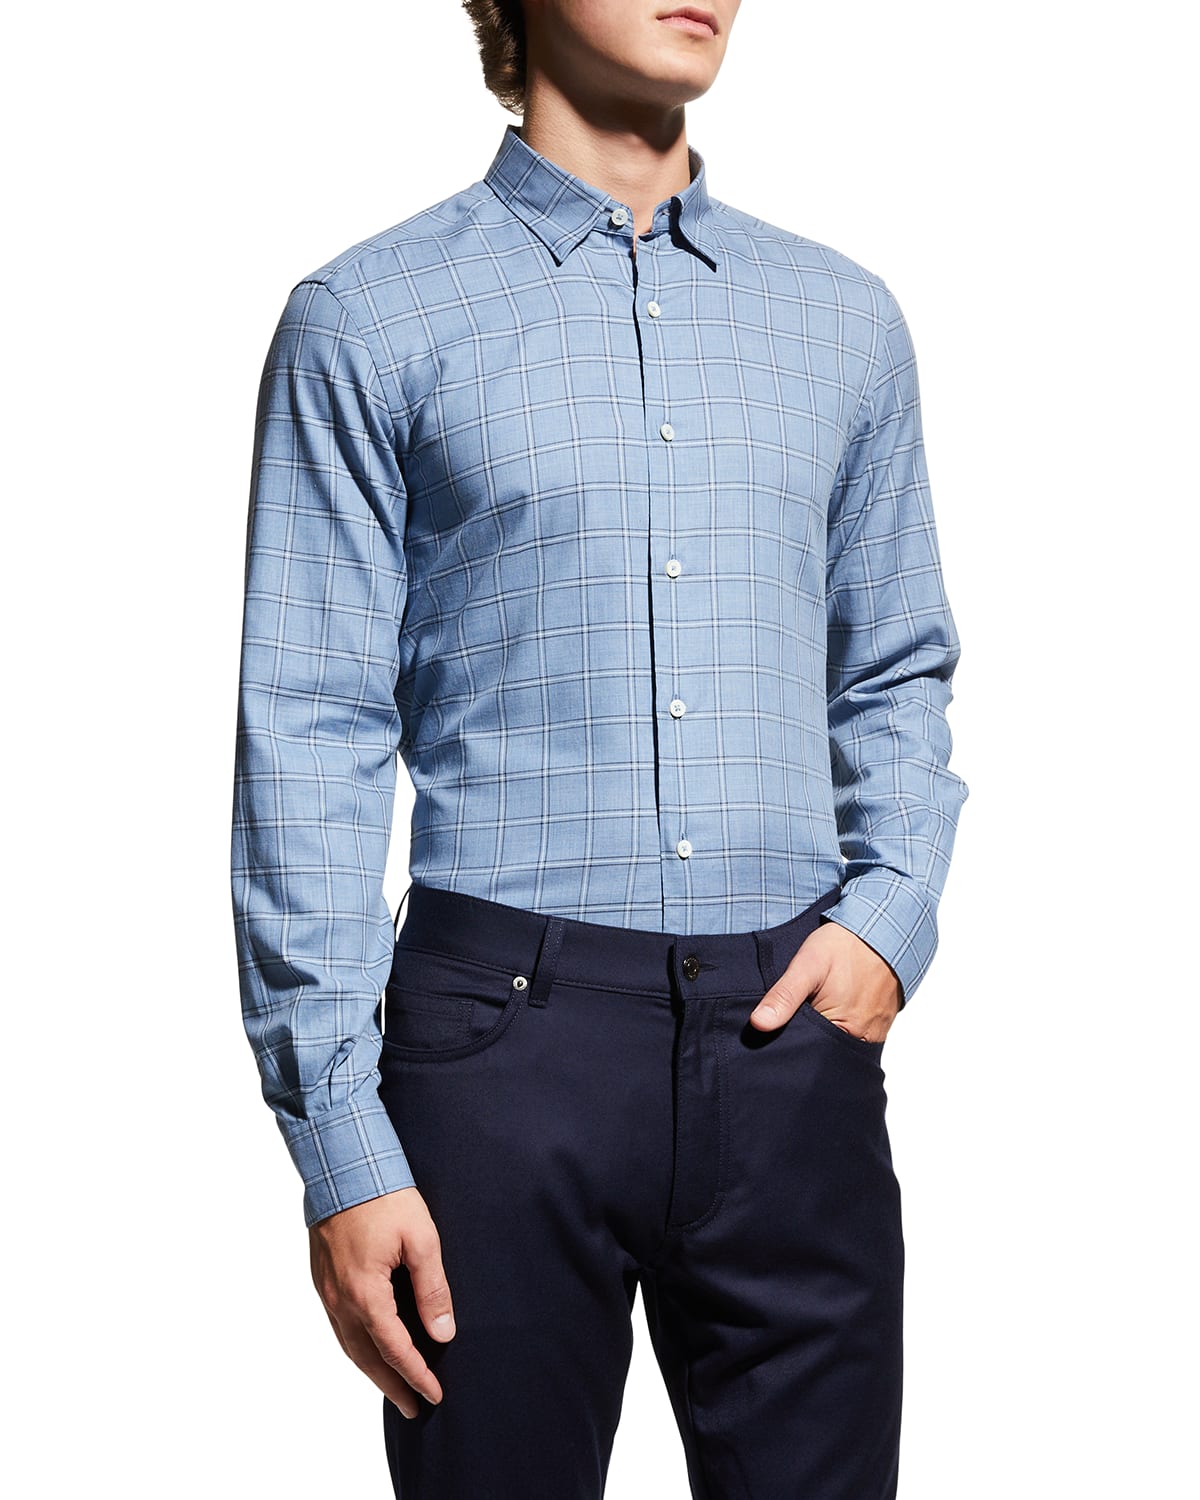 Zegna Men's Windowpane Sport Shirt In Bright Blue Chk